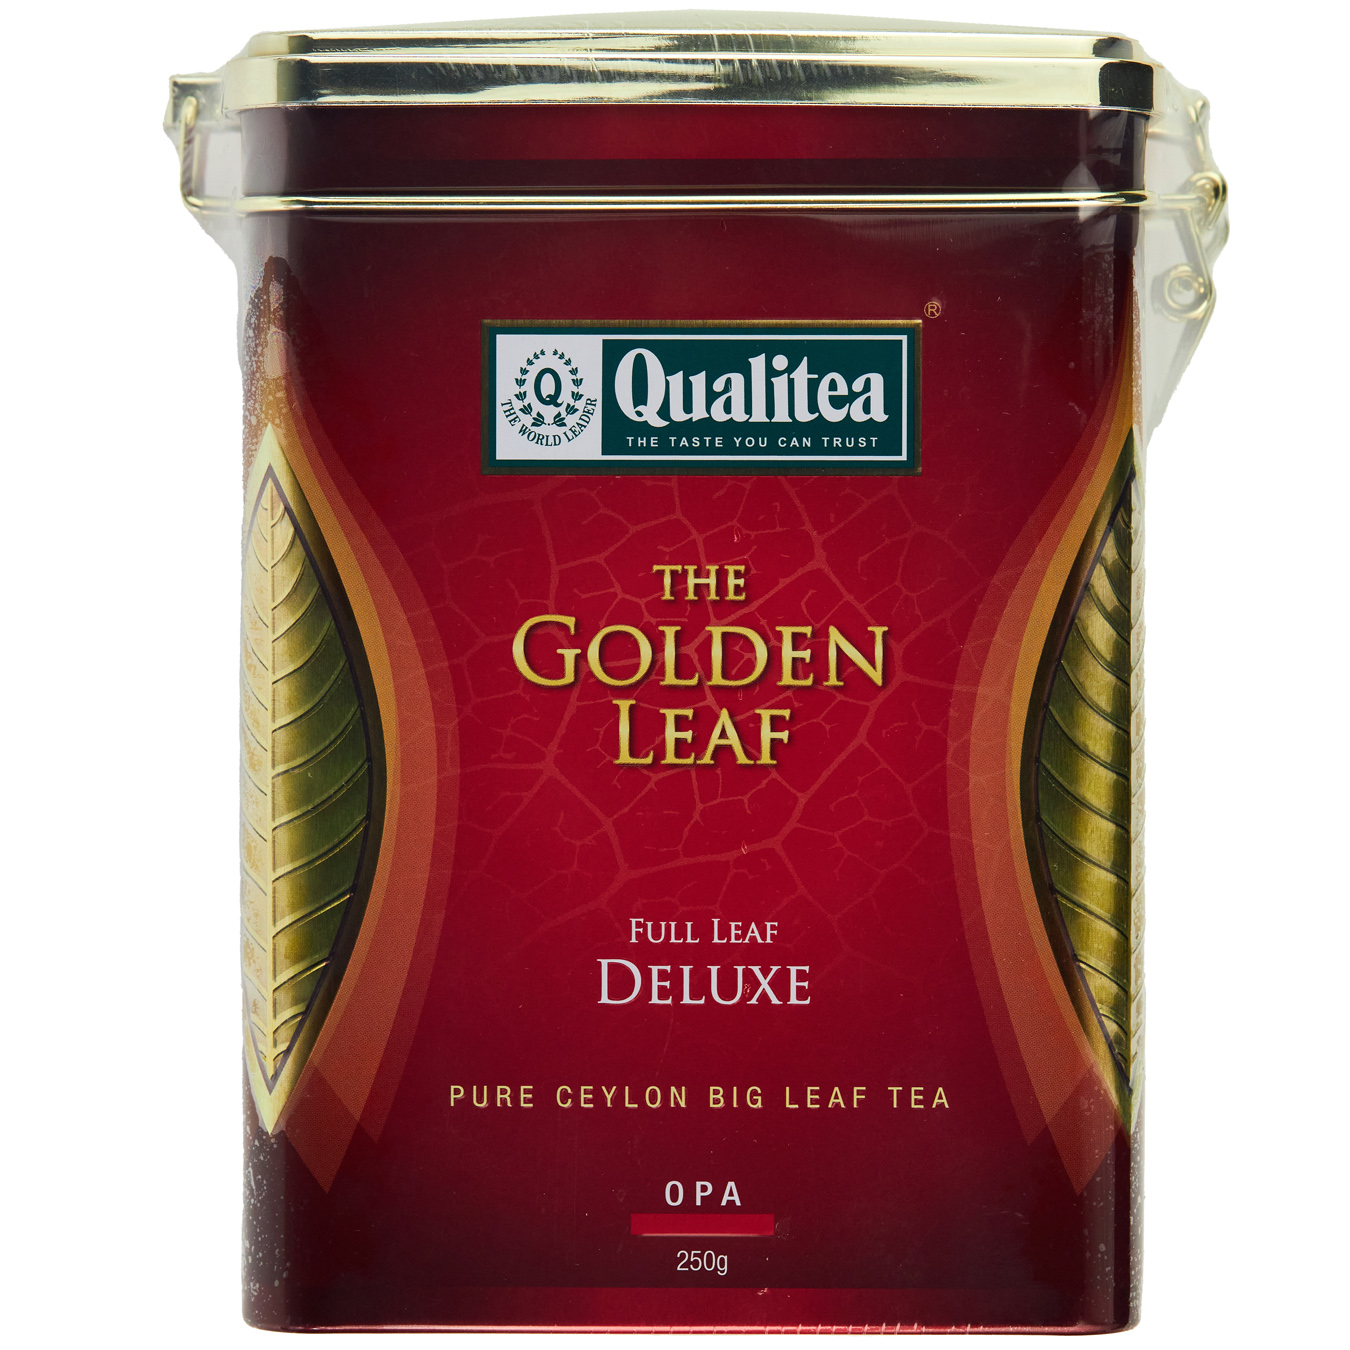 Qualitea The Golden Leaf Full Leaf Deluxe Black Tea 250g